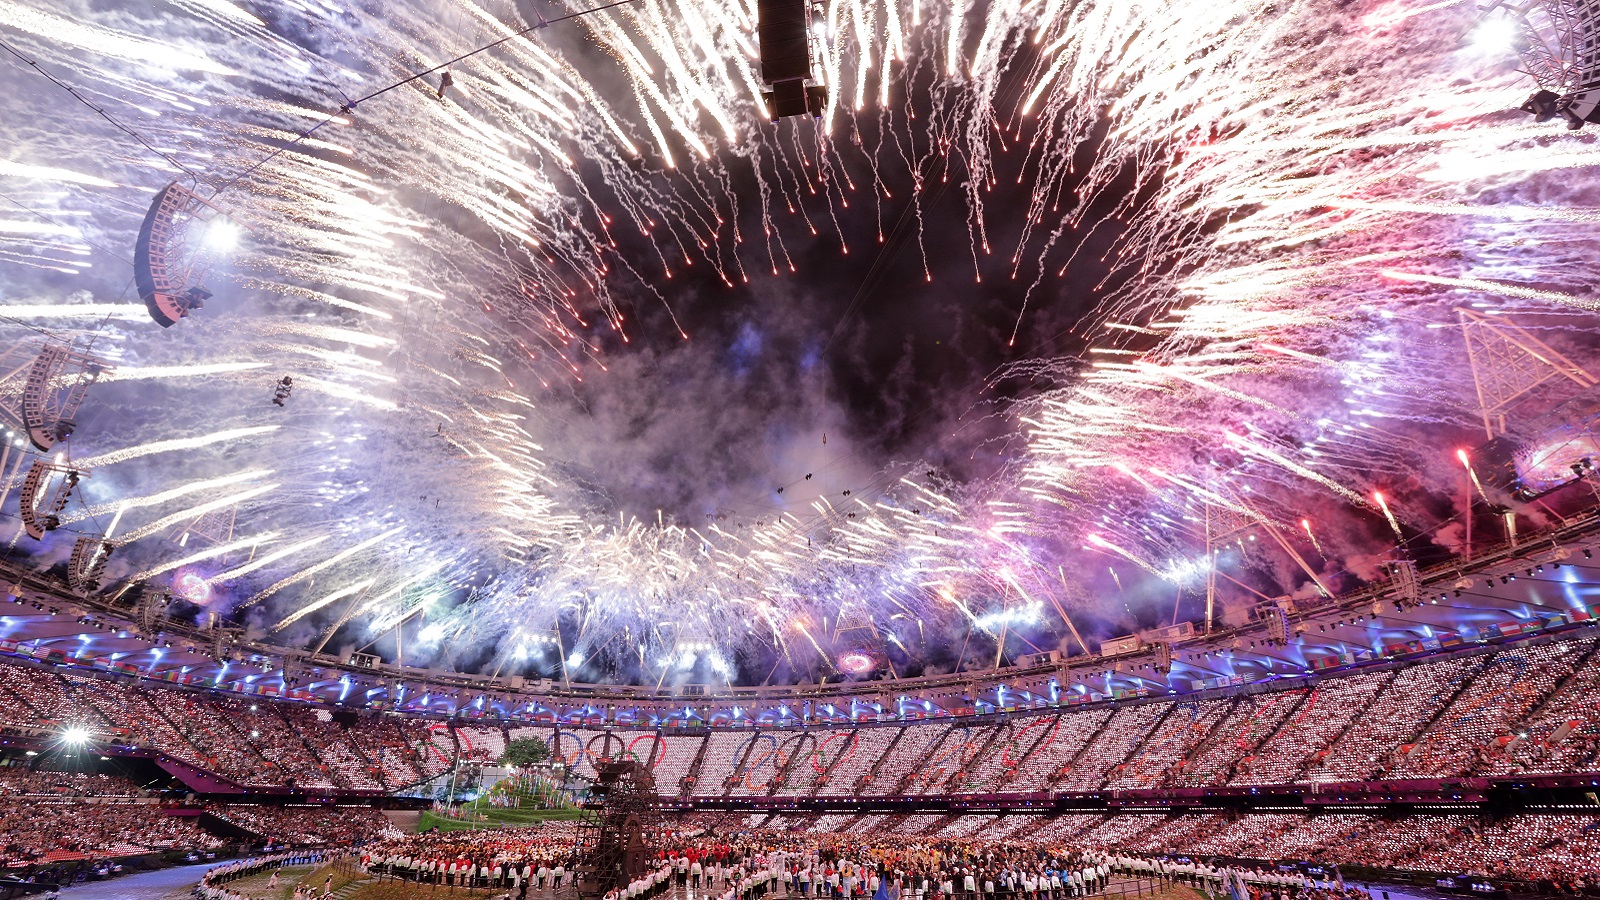 London 2012 Olympic Stadium - Populous